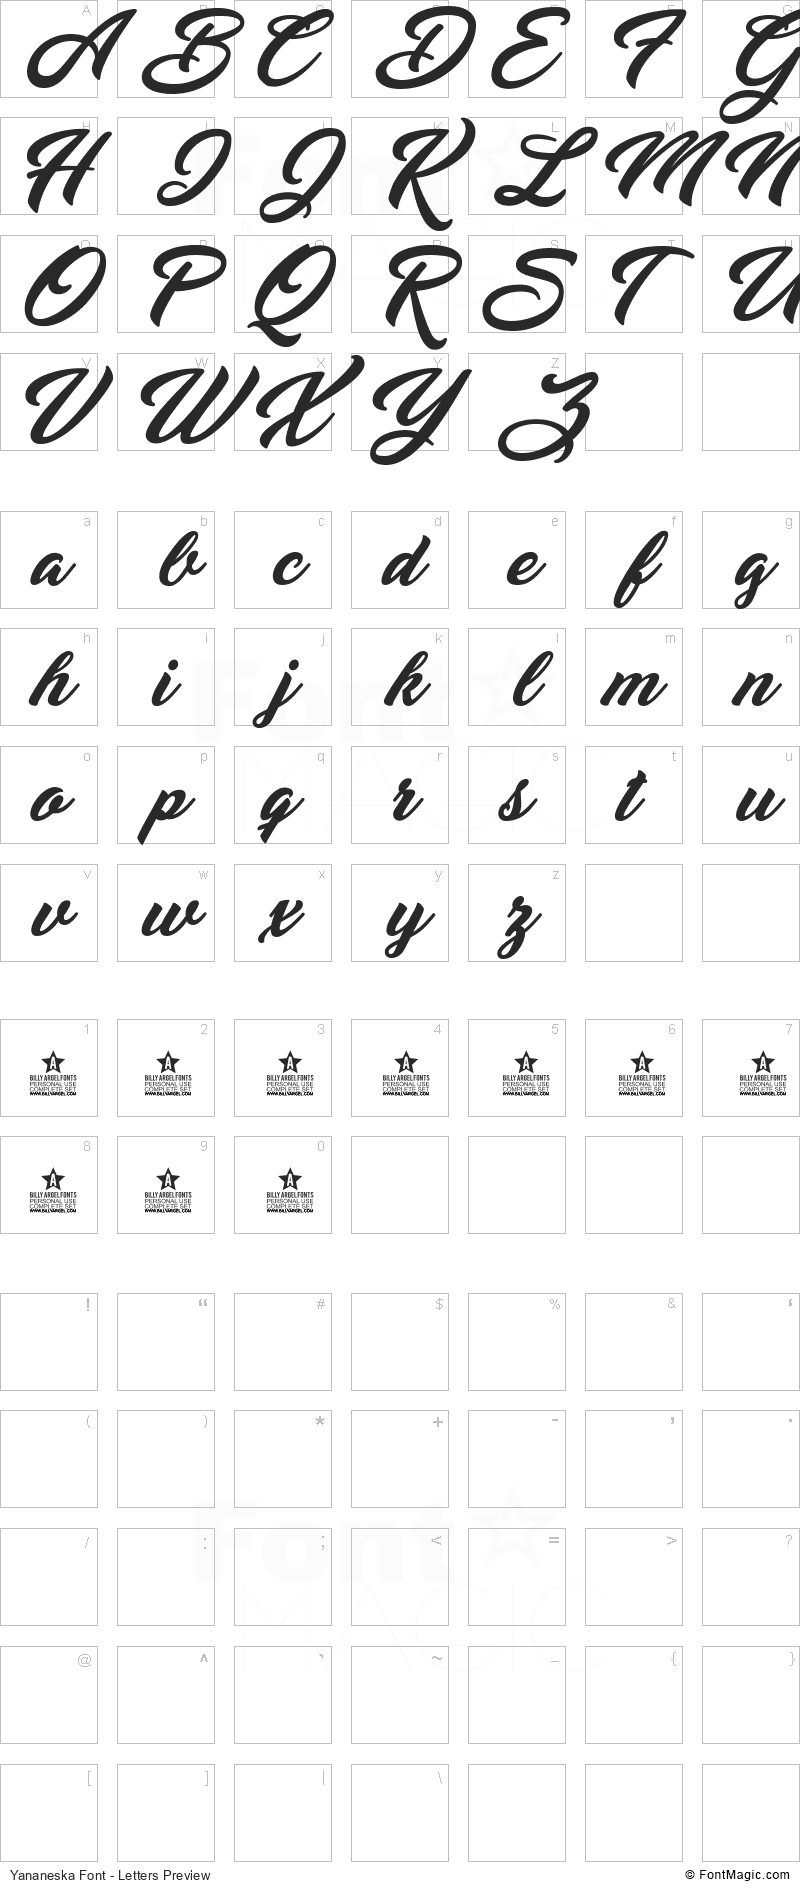 Yananeska Font - All Latters Preview Chart